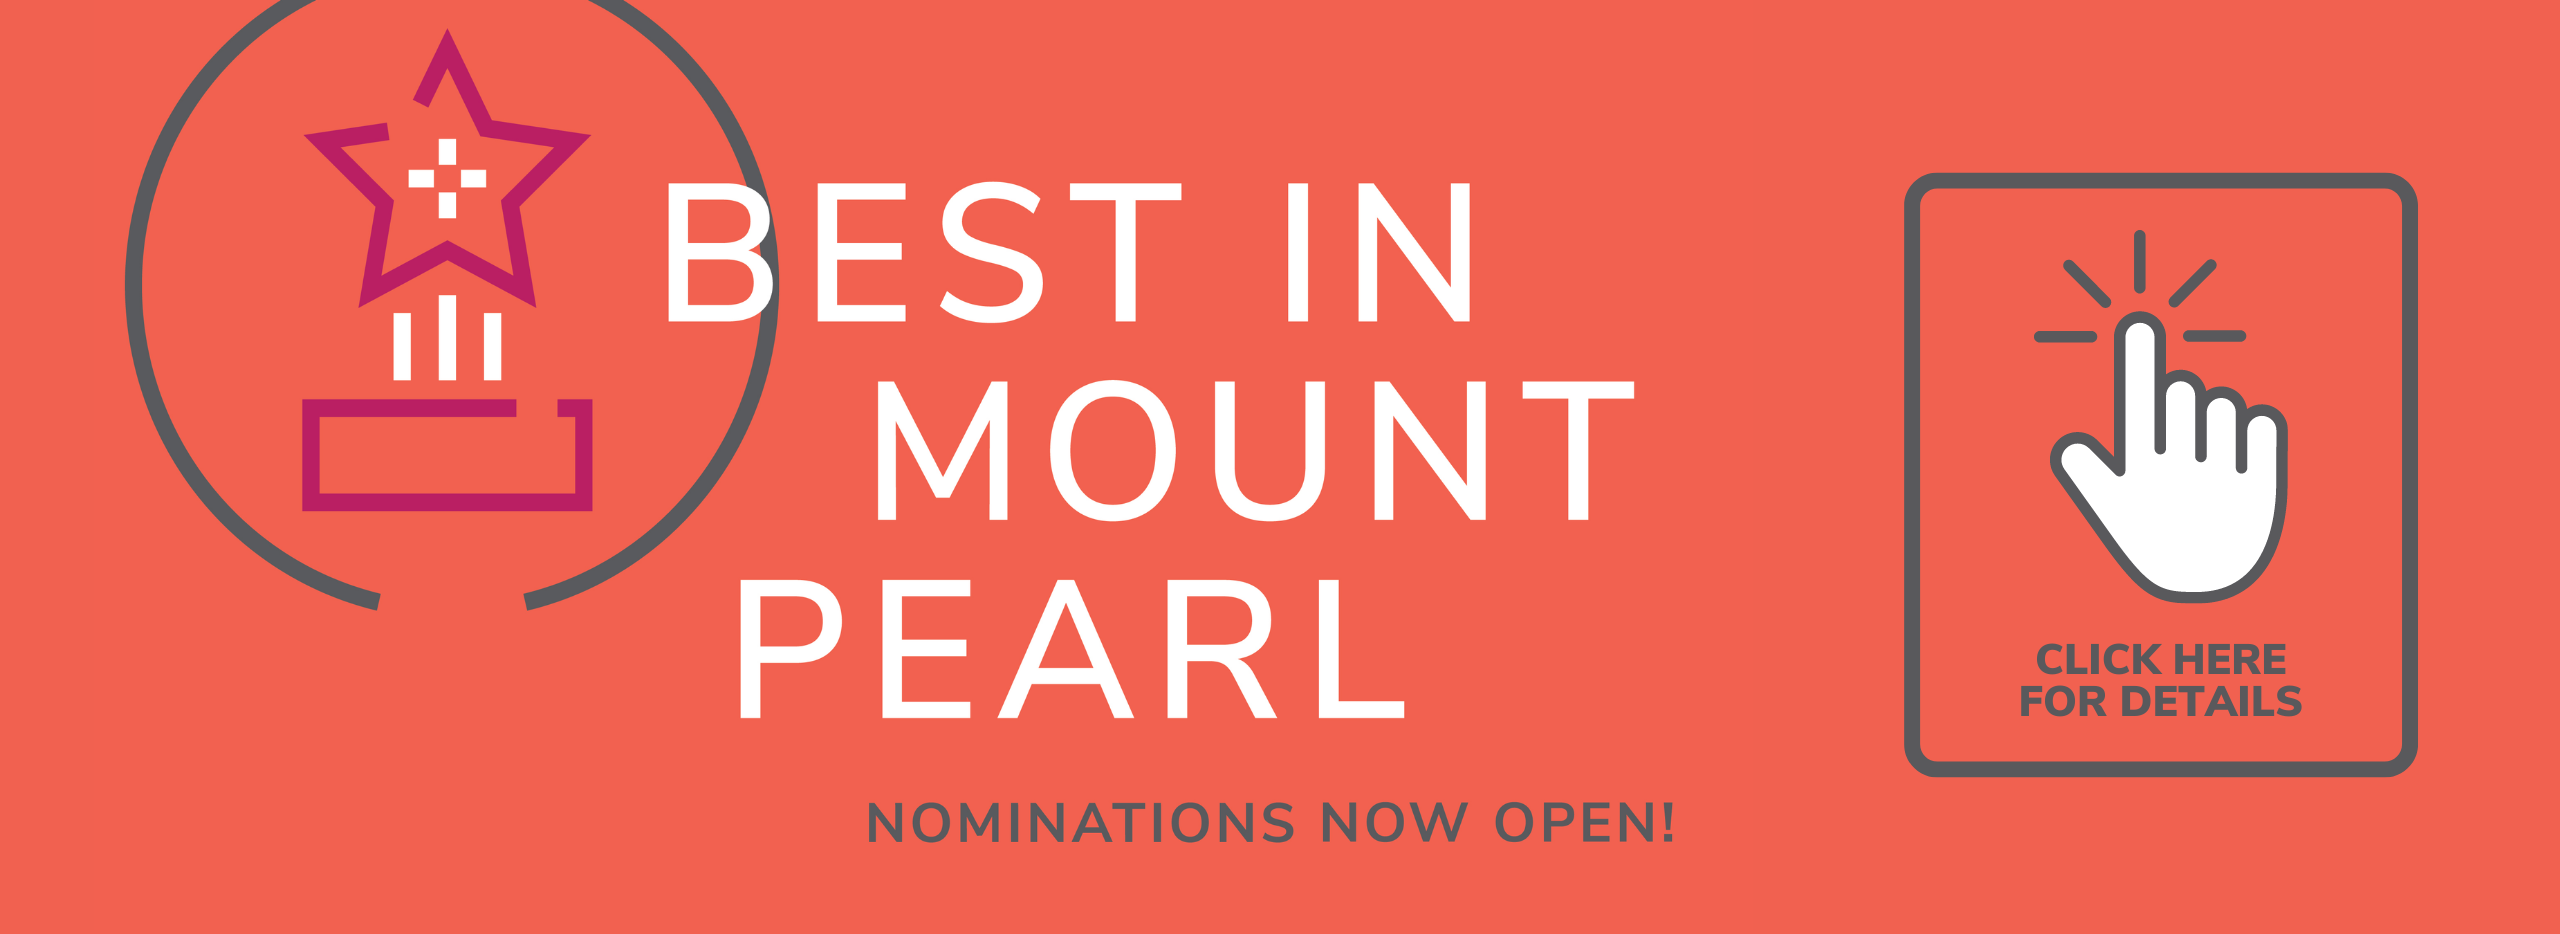 Best in Mount Pearl_Website Banner (2560 x 934 px) (1)